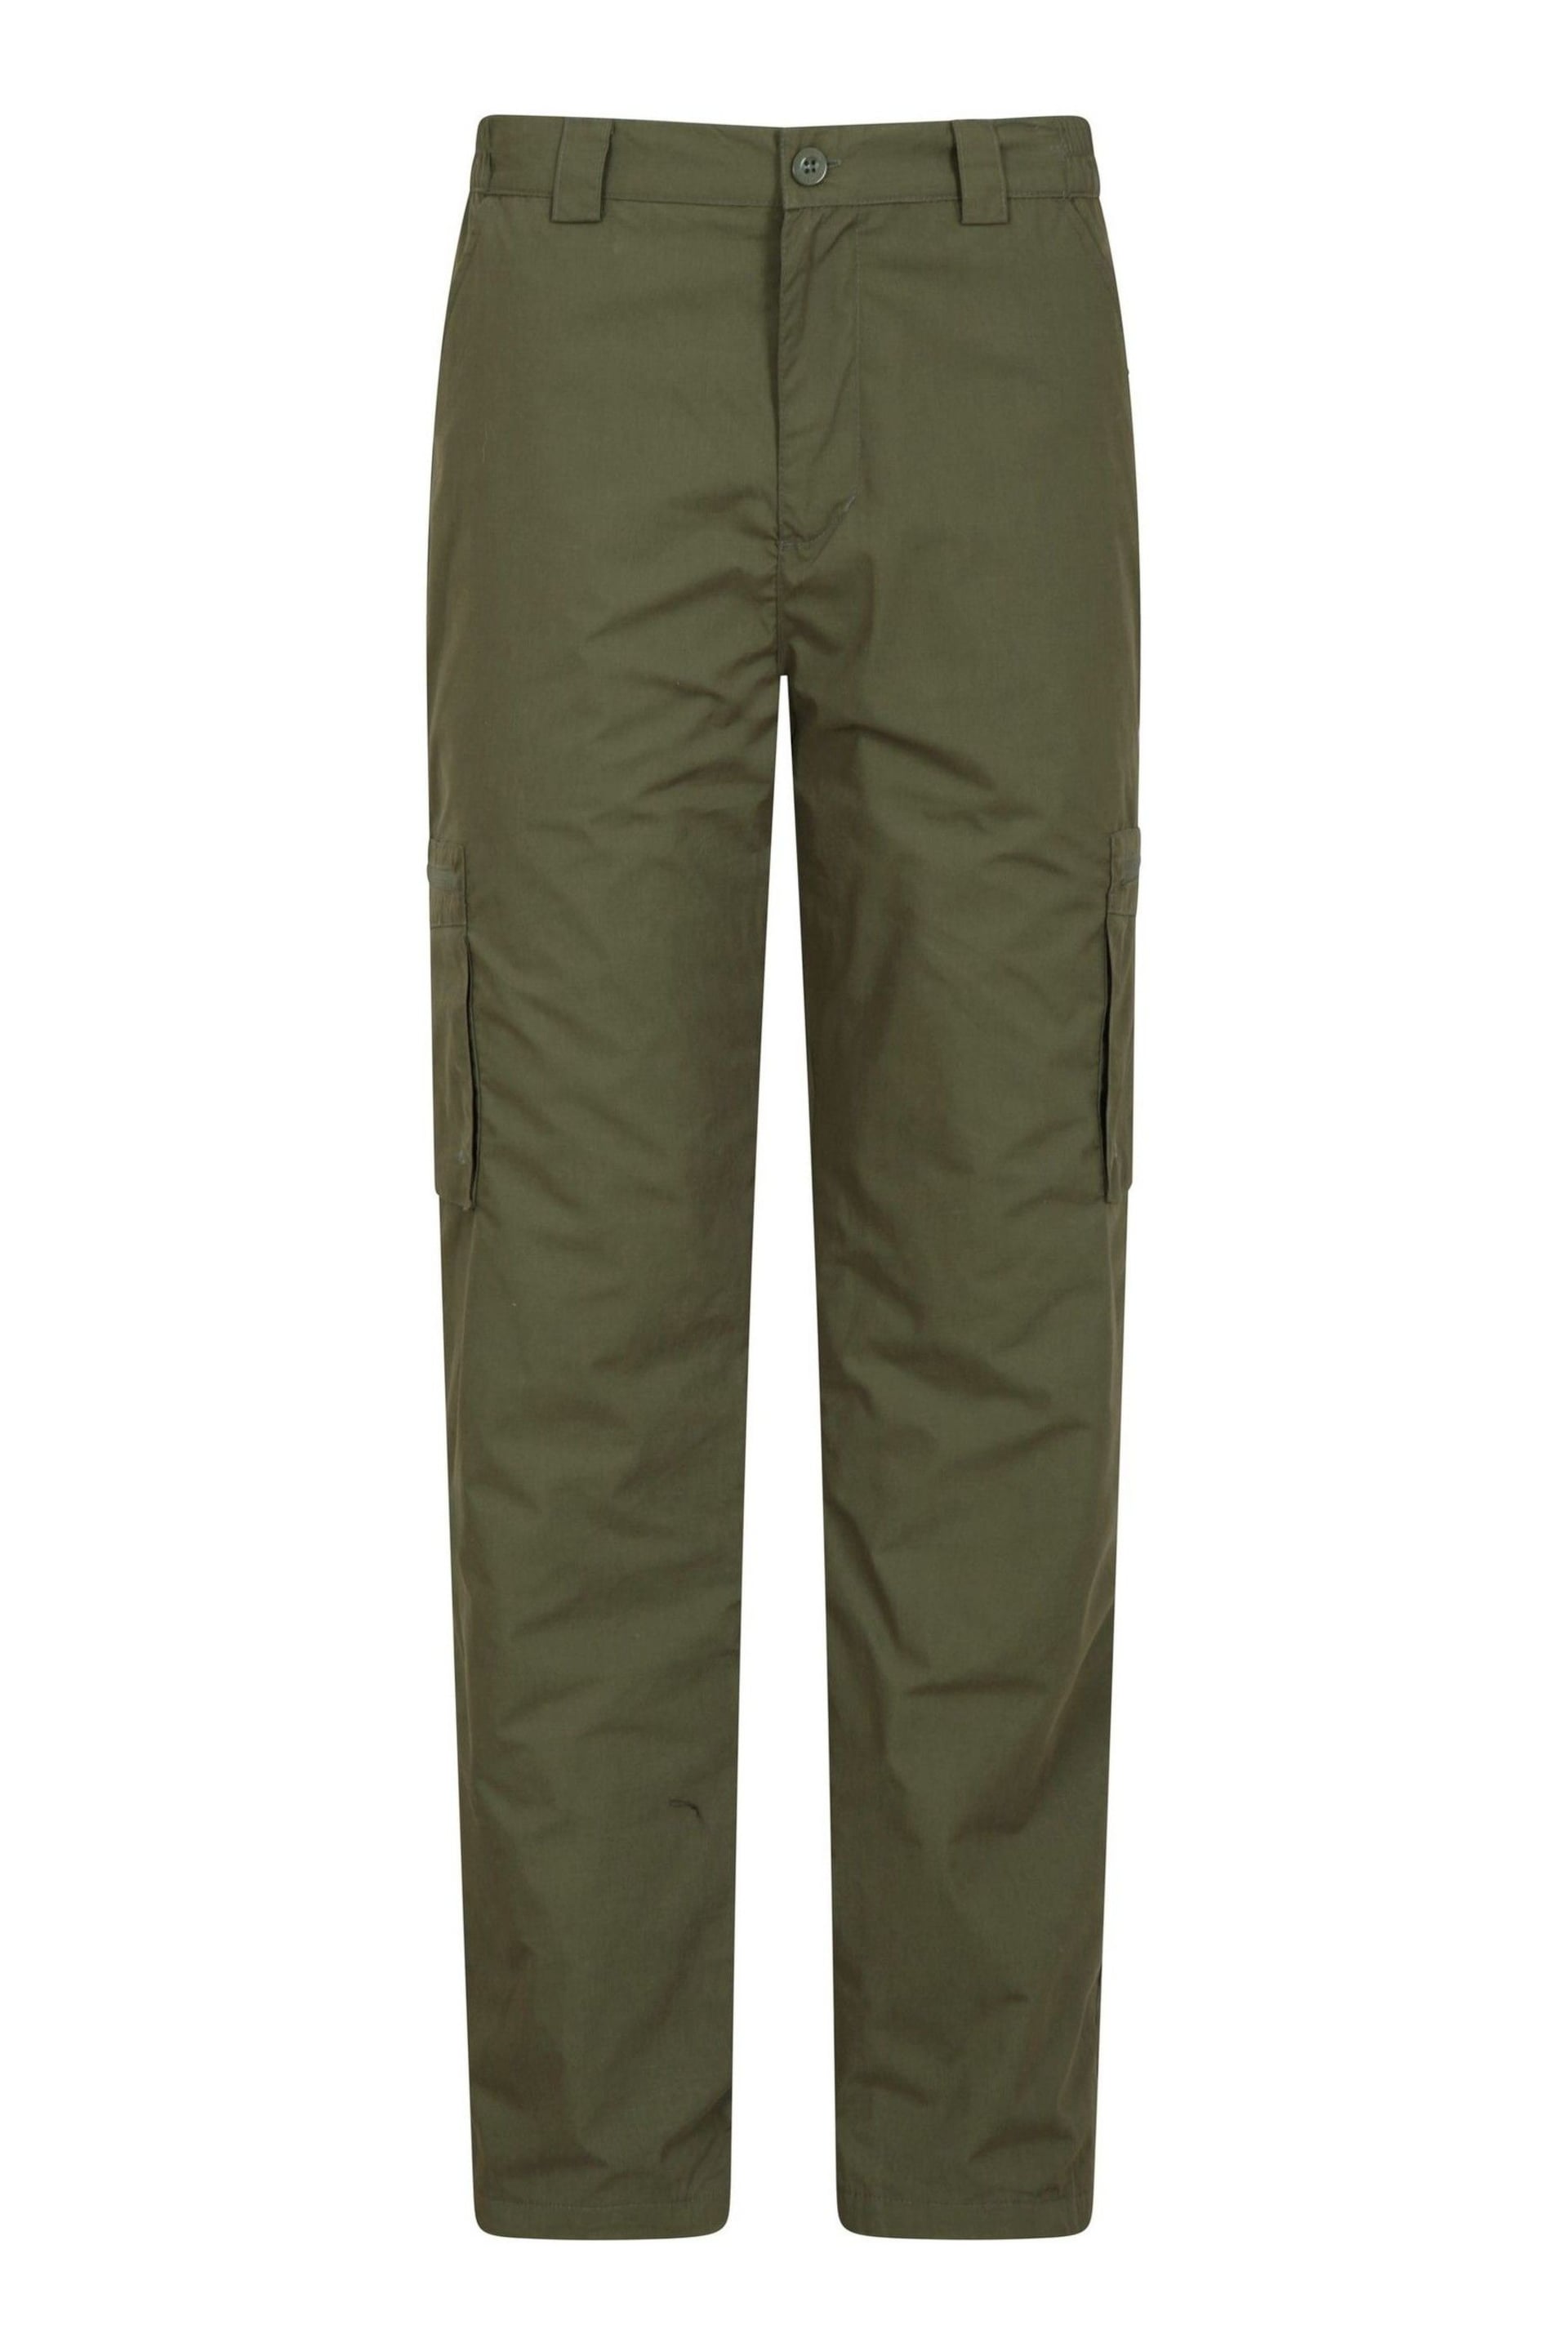 Mountain Warehouse Green Mens Winter Trek II Short Length Trousers - Image 1 of 5